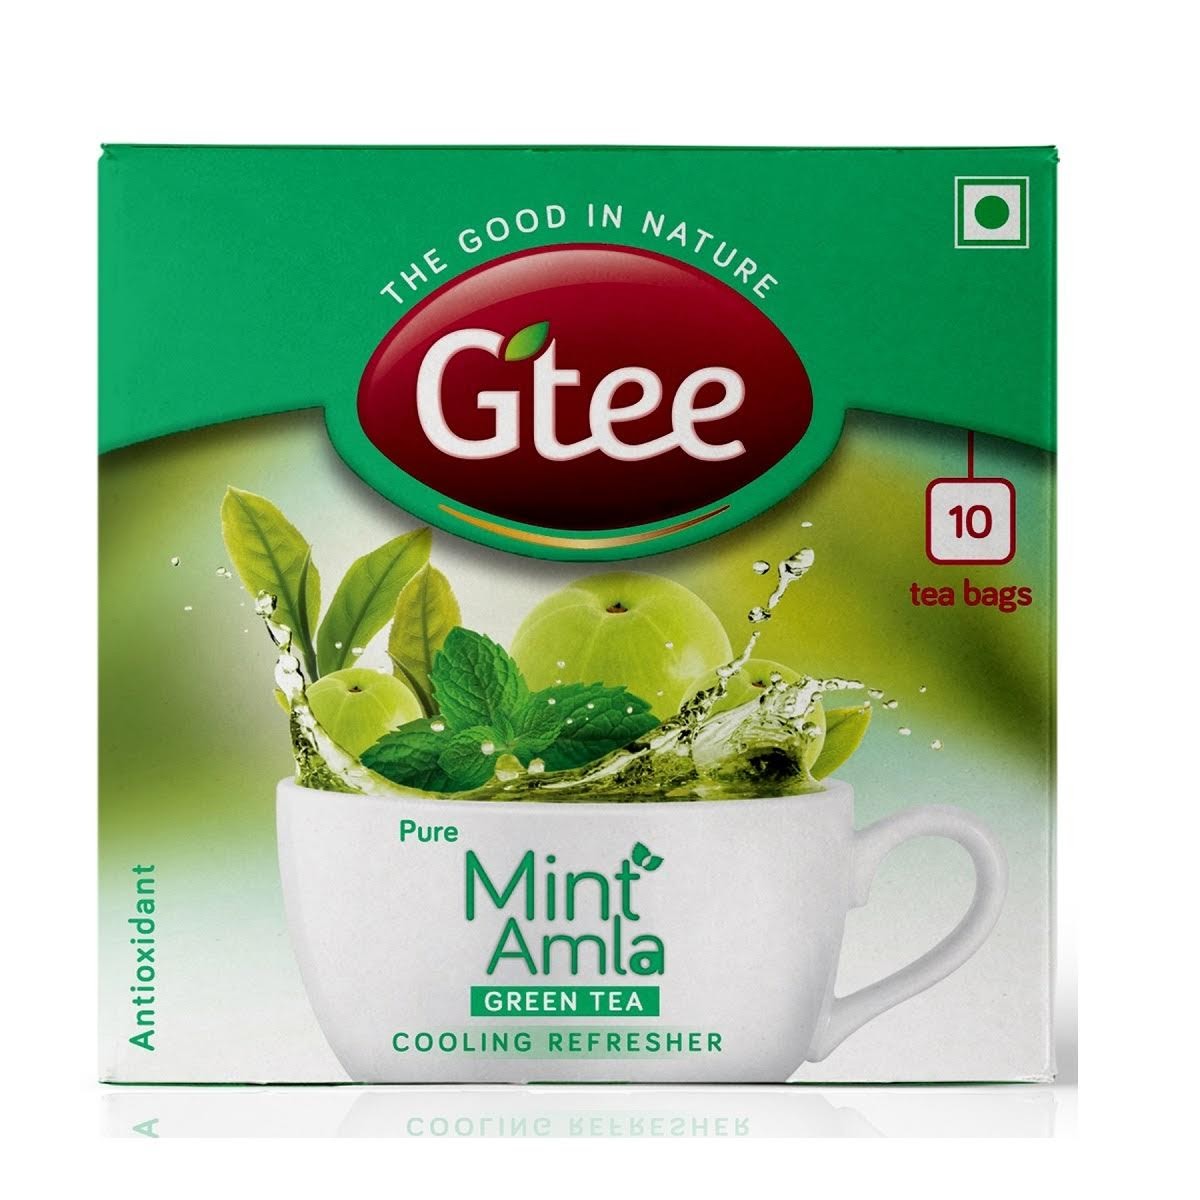 Gtee Green Tea Mint